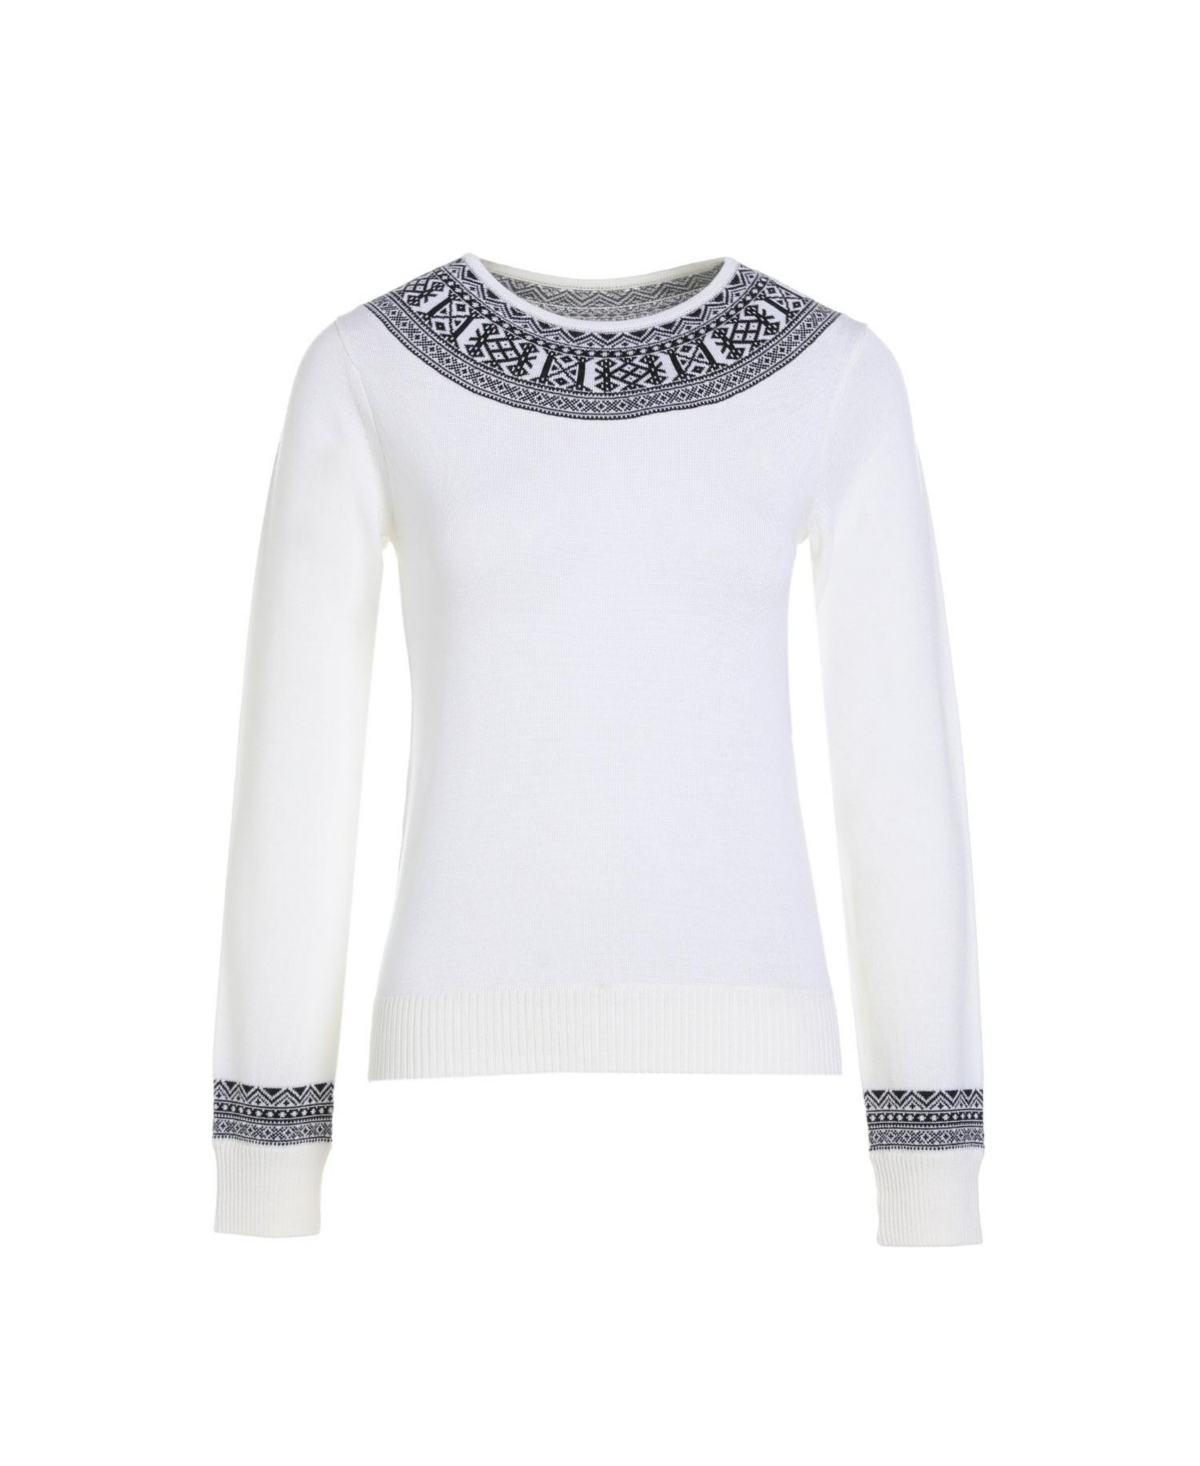 Women's Bellemere Sweden Design Pullover - White